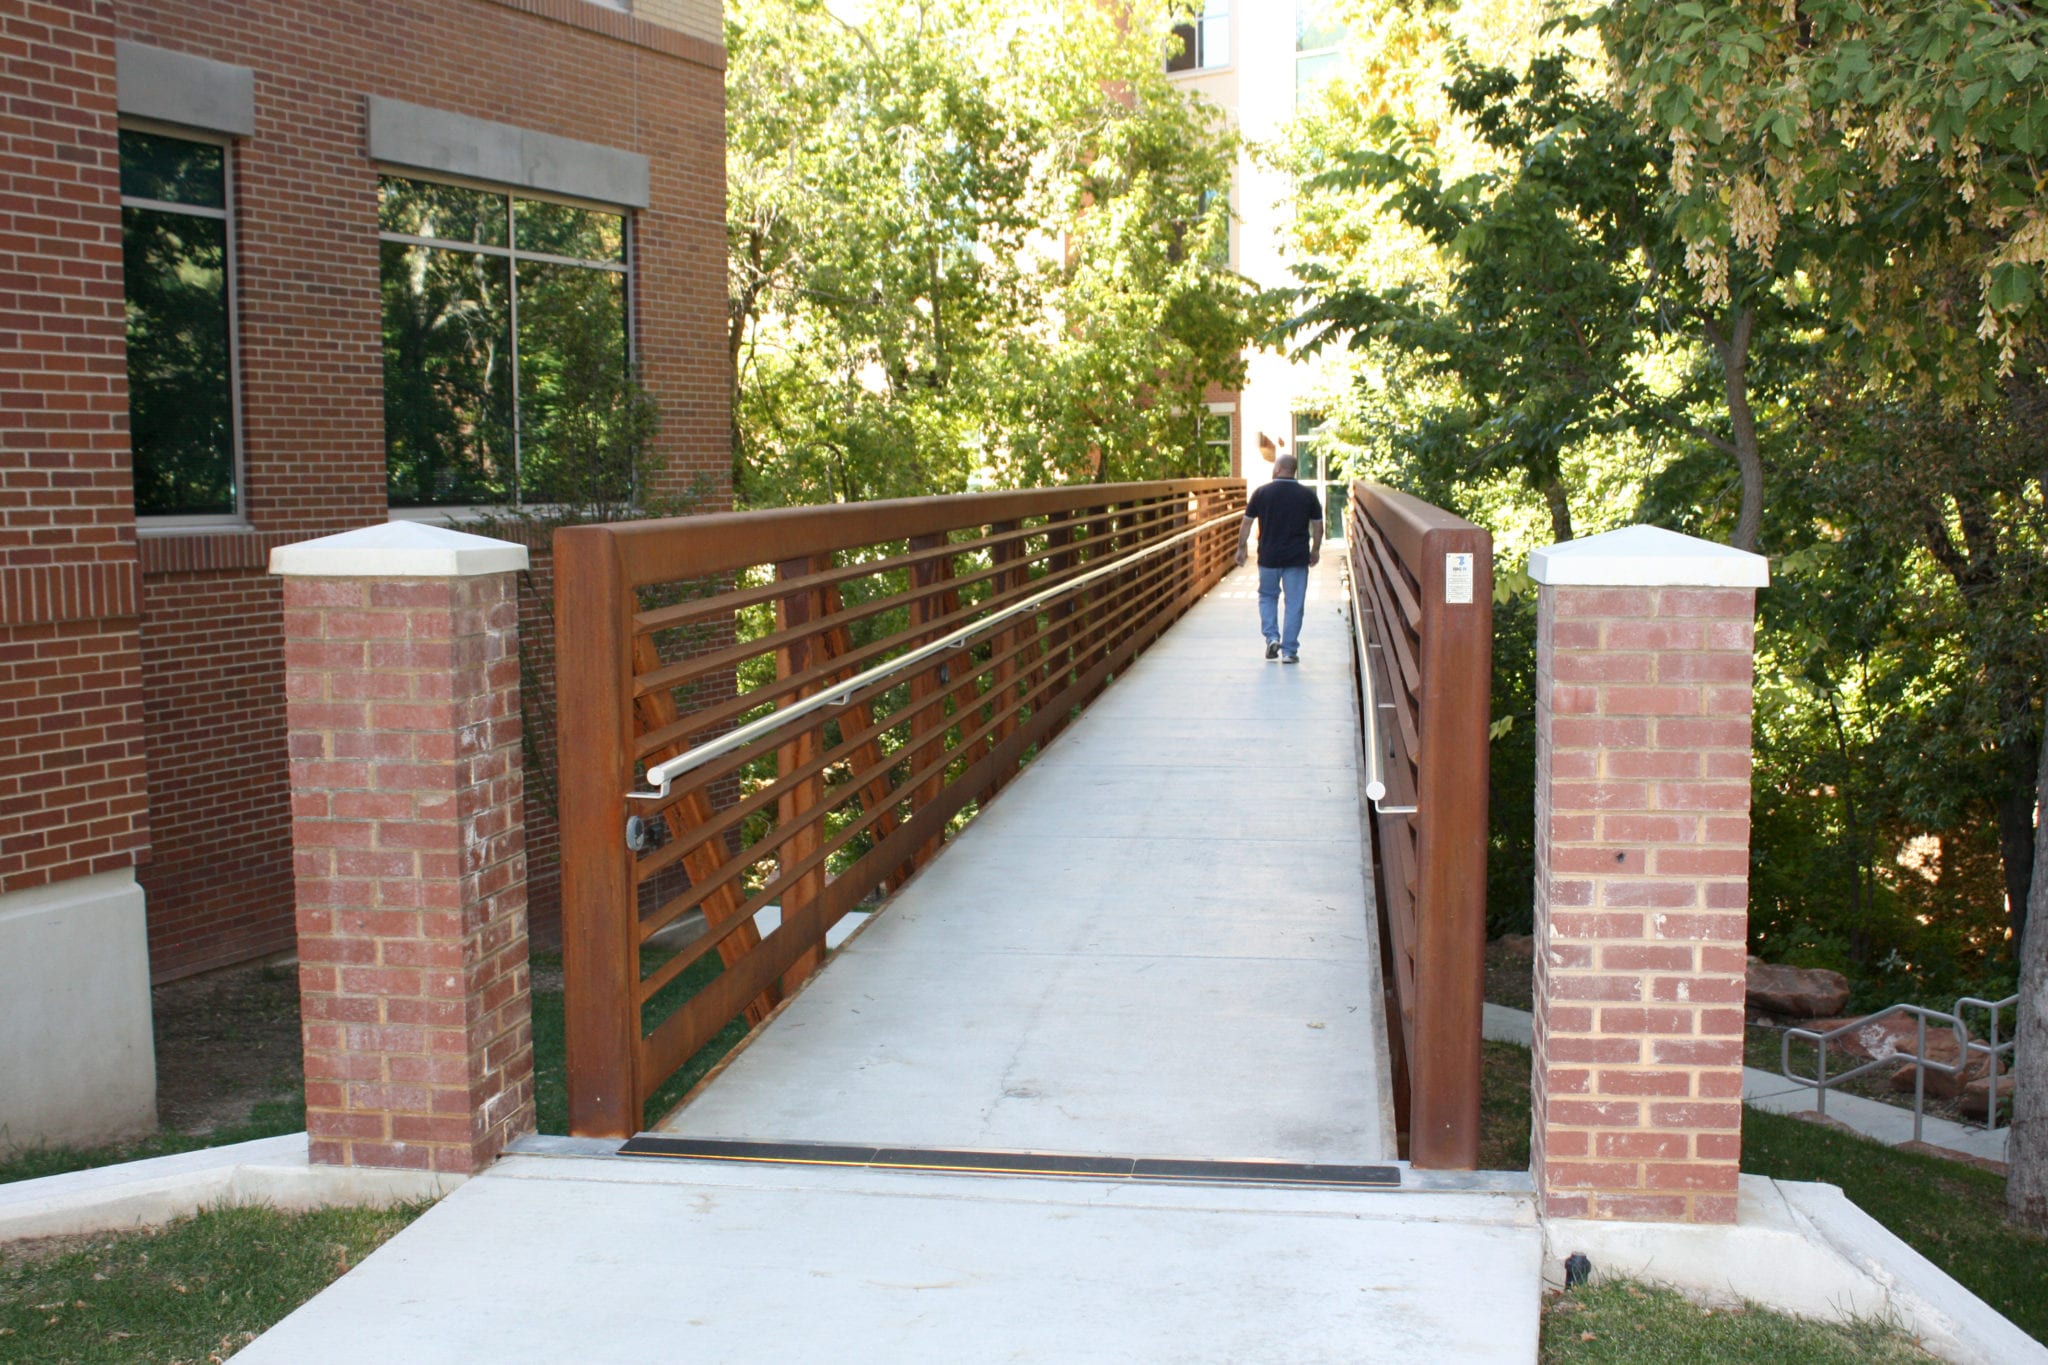 Prefabricated pedestrian bridge connects college campus